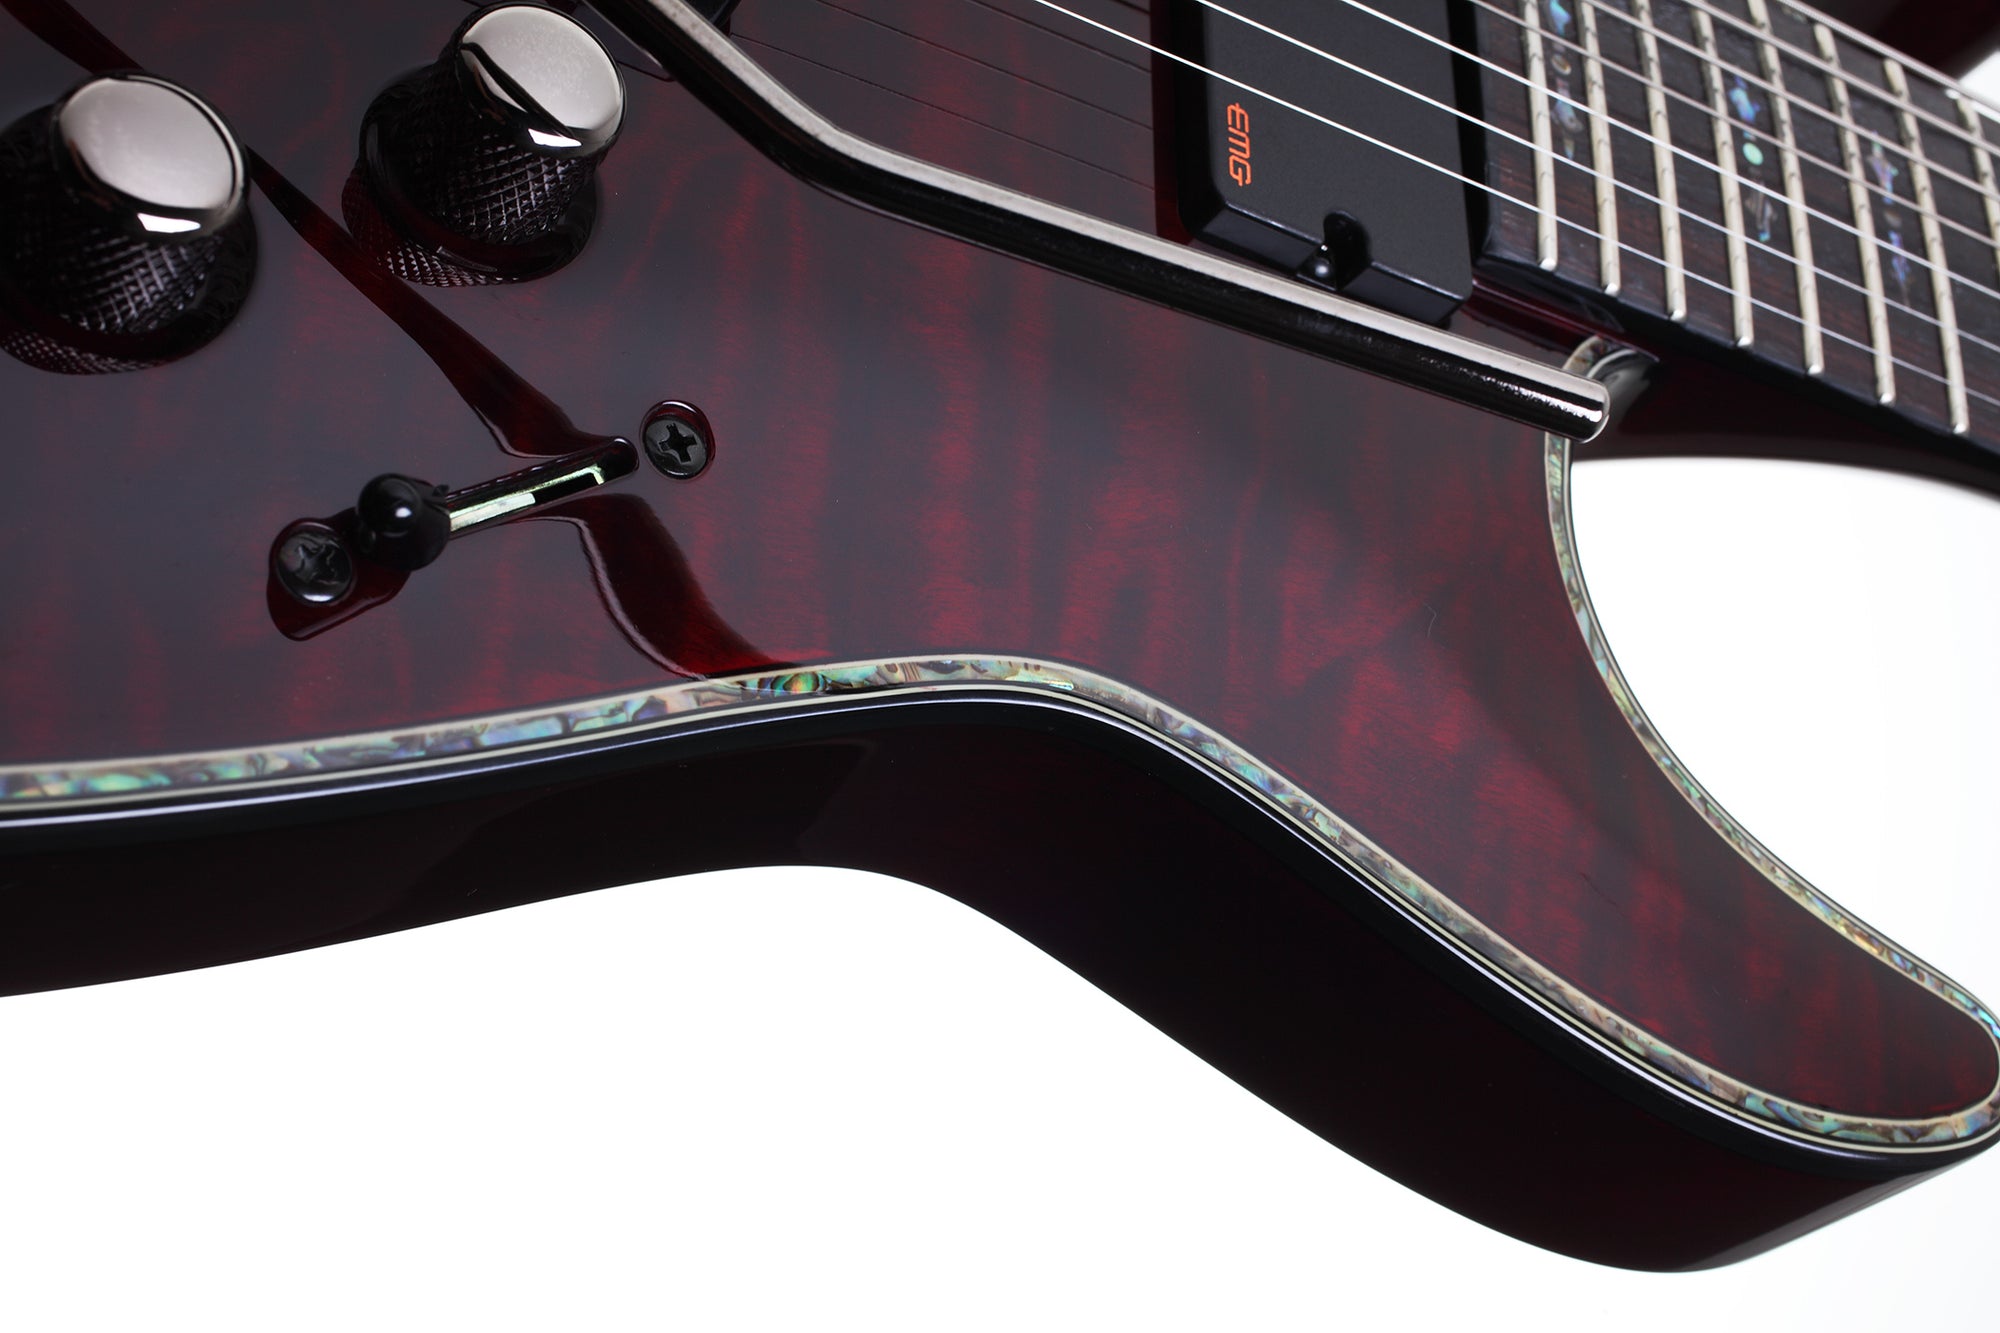 Schecter Hellraiser Series HR-C-7-FR-BCH Black Cherry 7 String Guitar With Floyd Rose & EMG 707TW 1812-SHC - The Guitar World